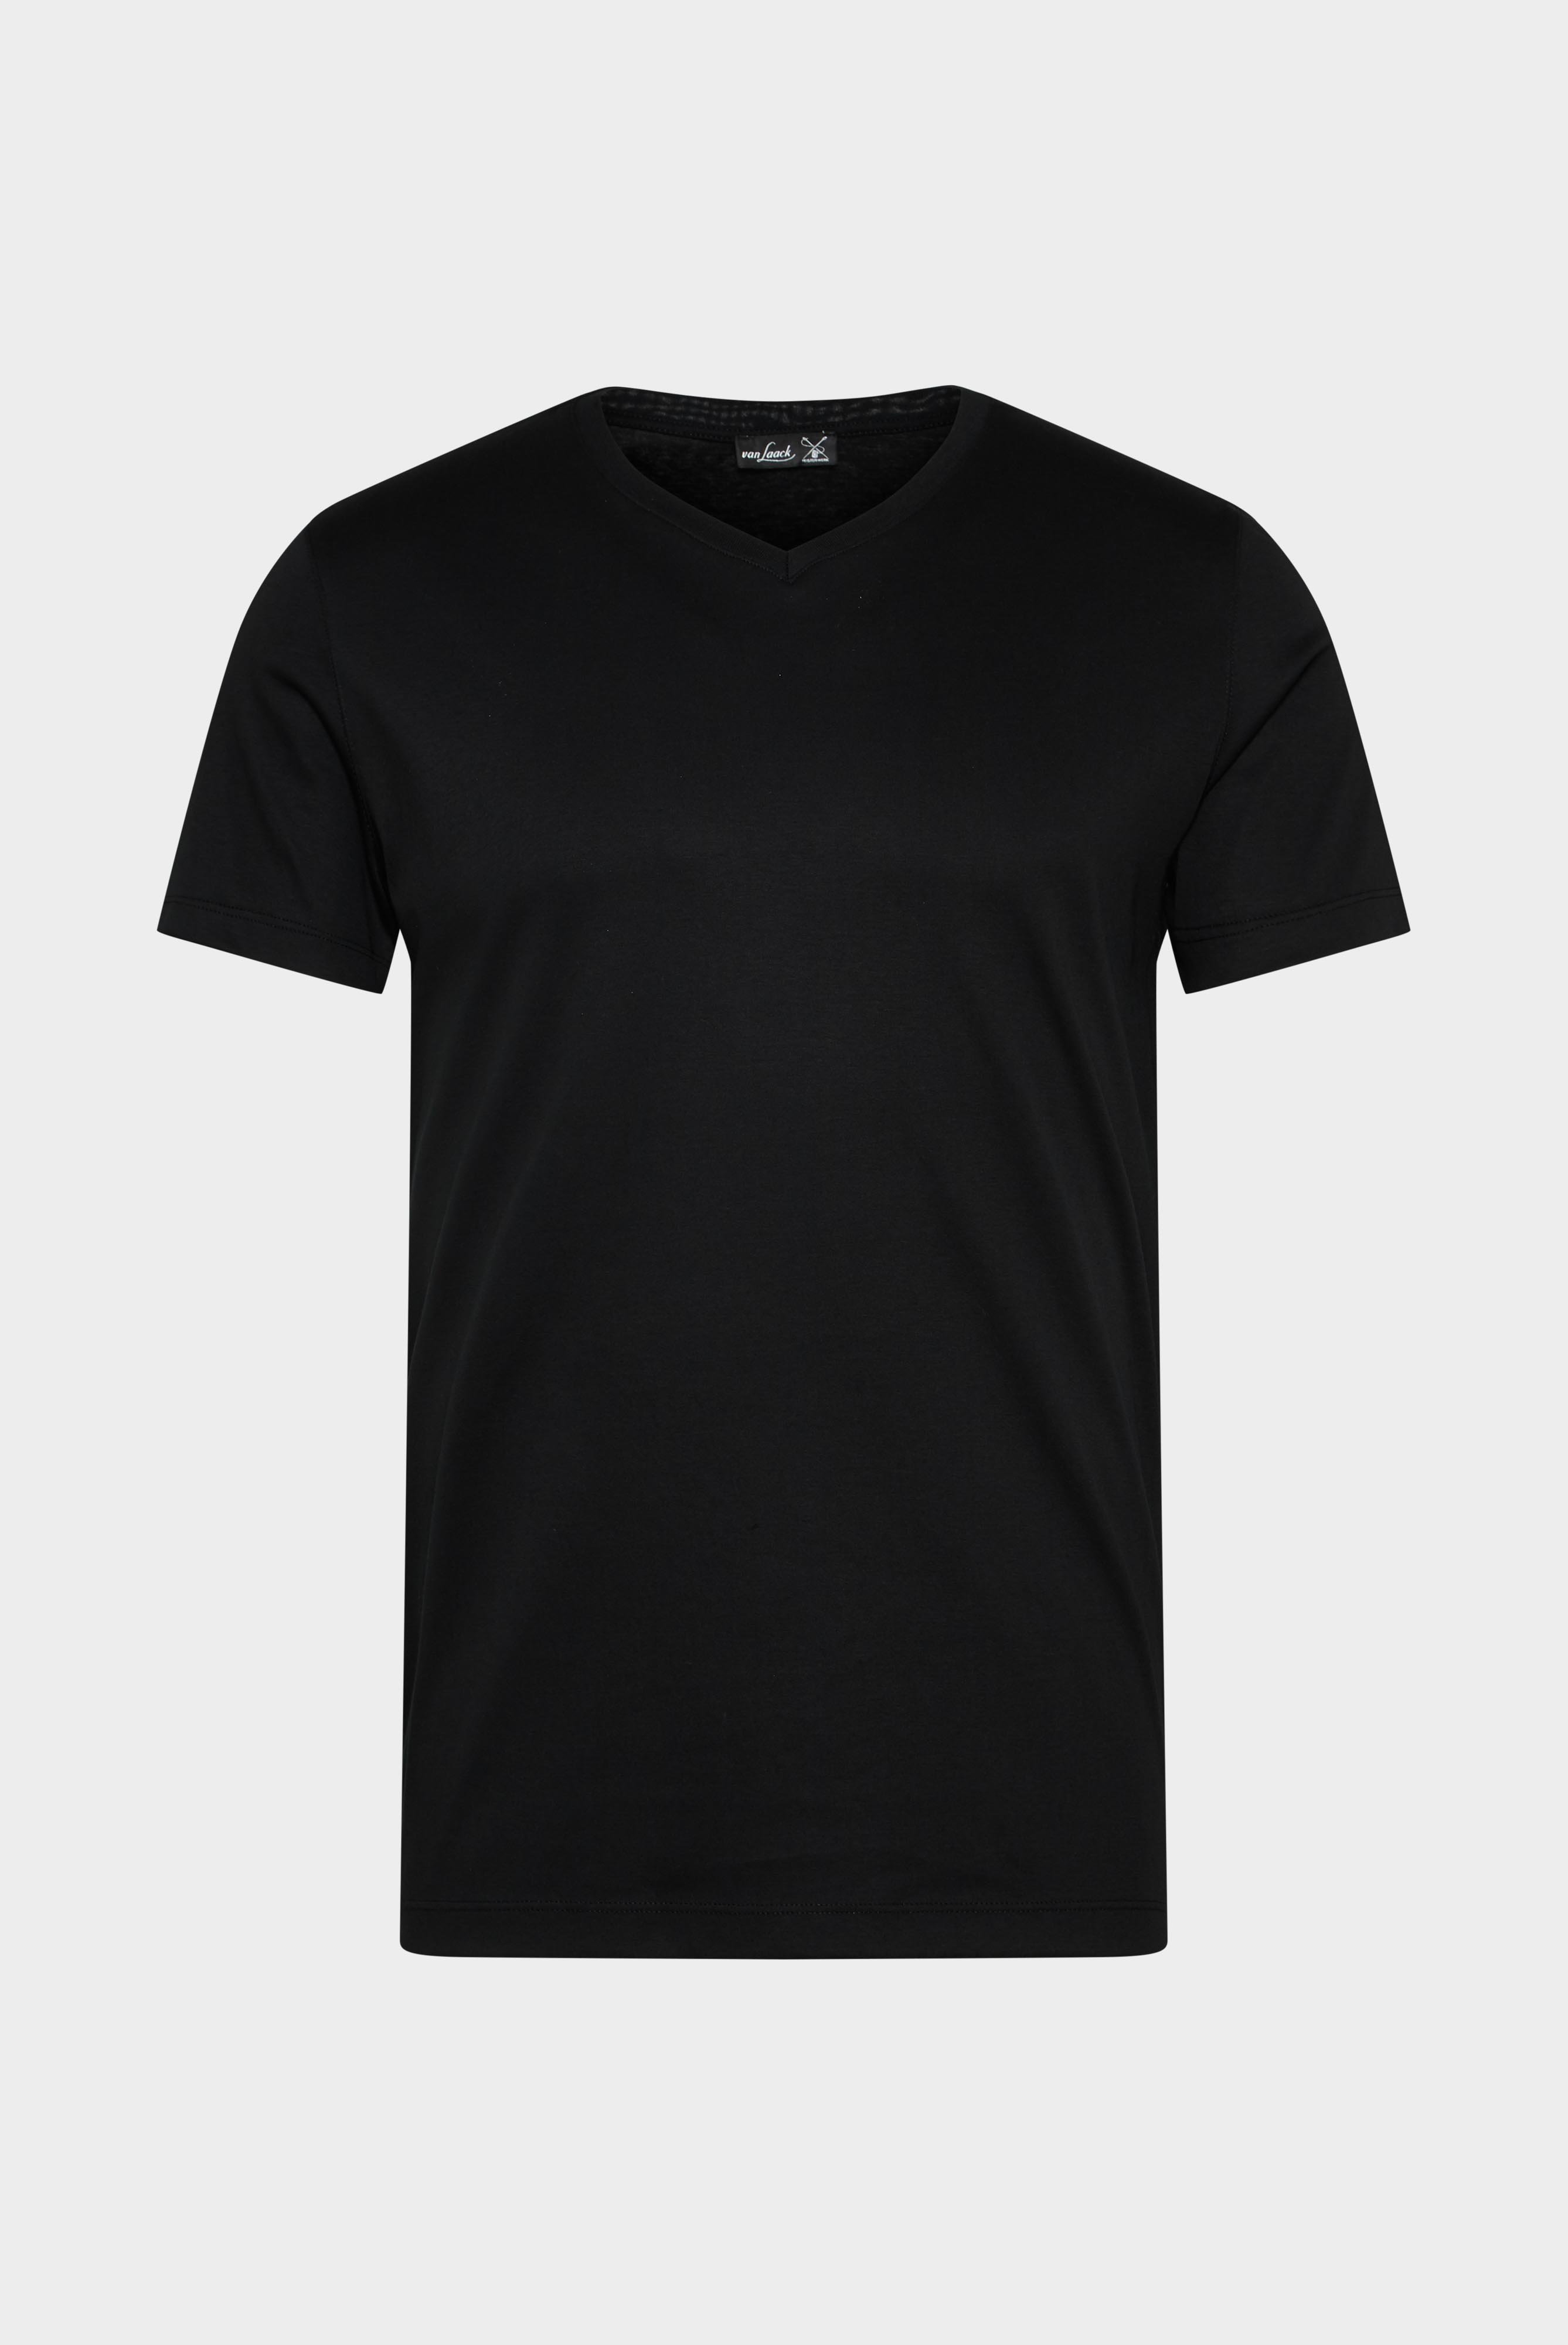 T-Shirts+Swiss Cotton Jersey V-Neck T-Shirt+20.1715.UX.180031.099.S